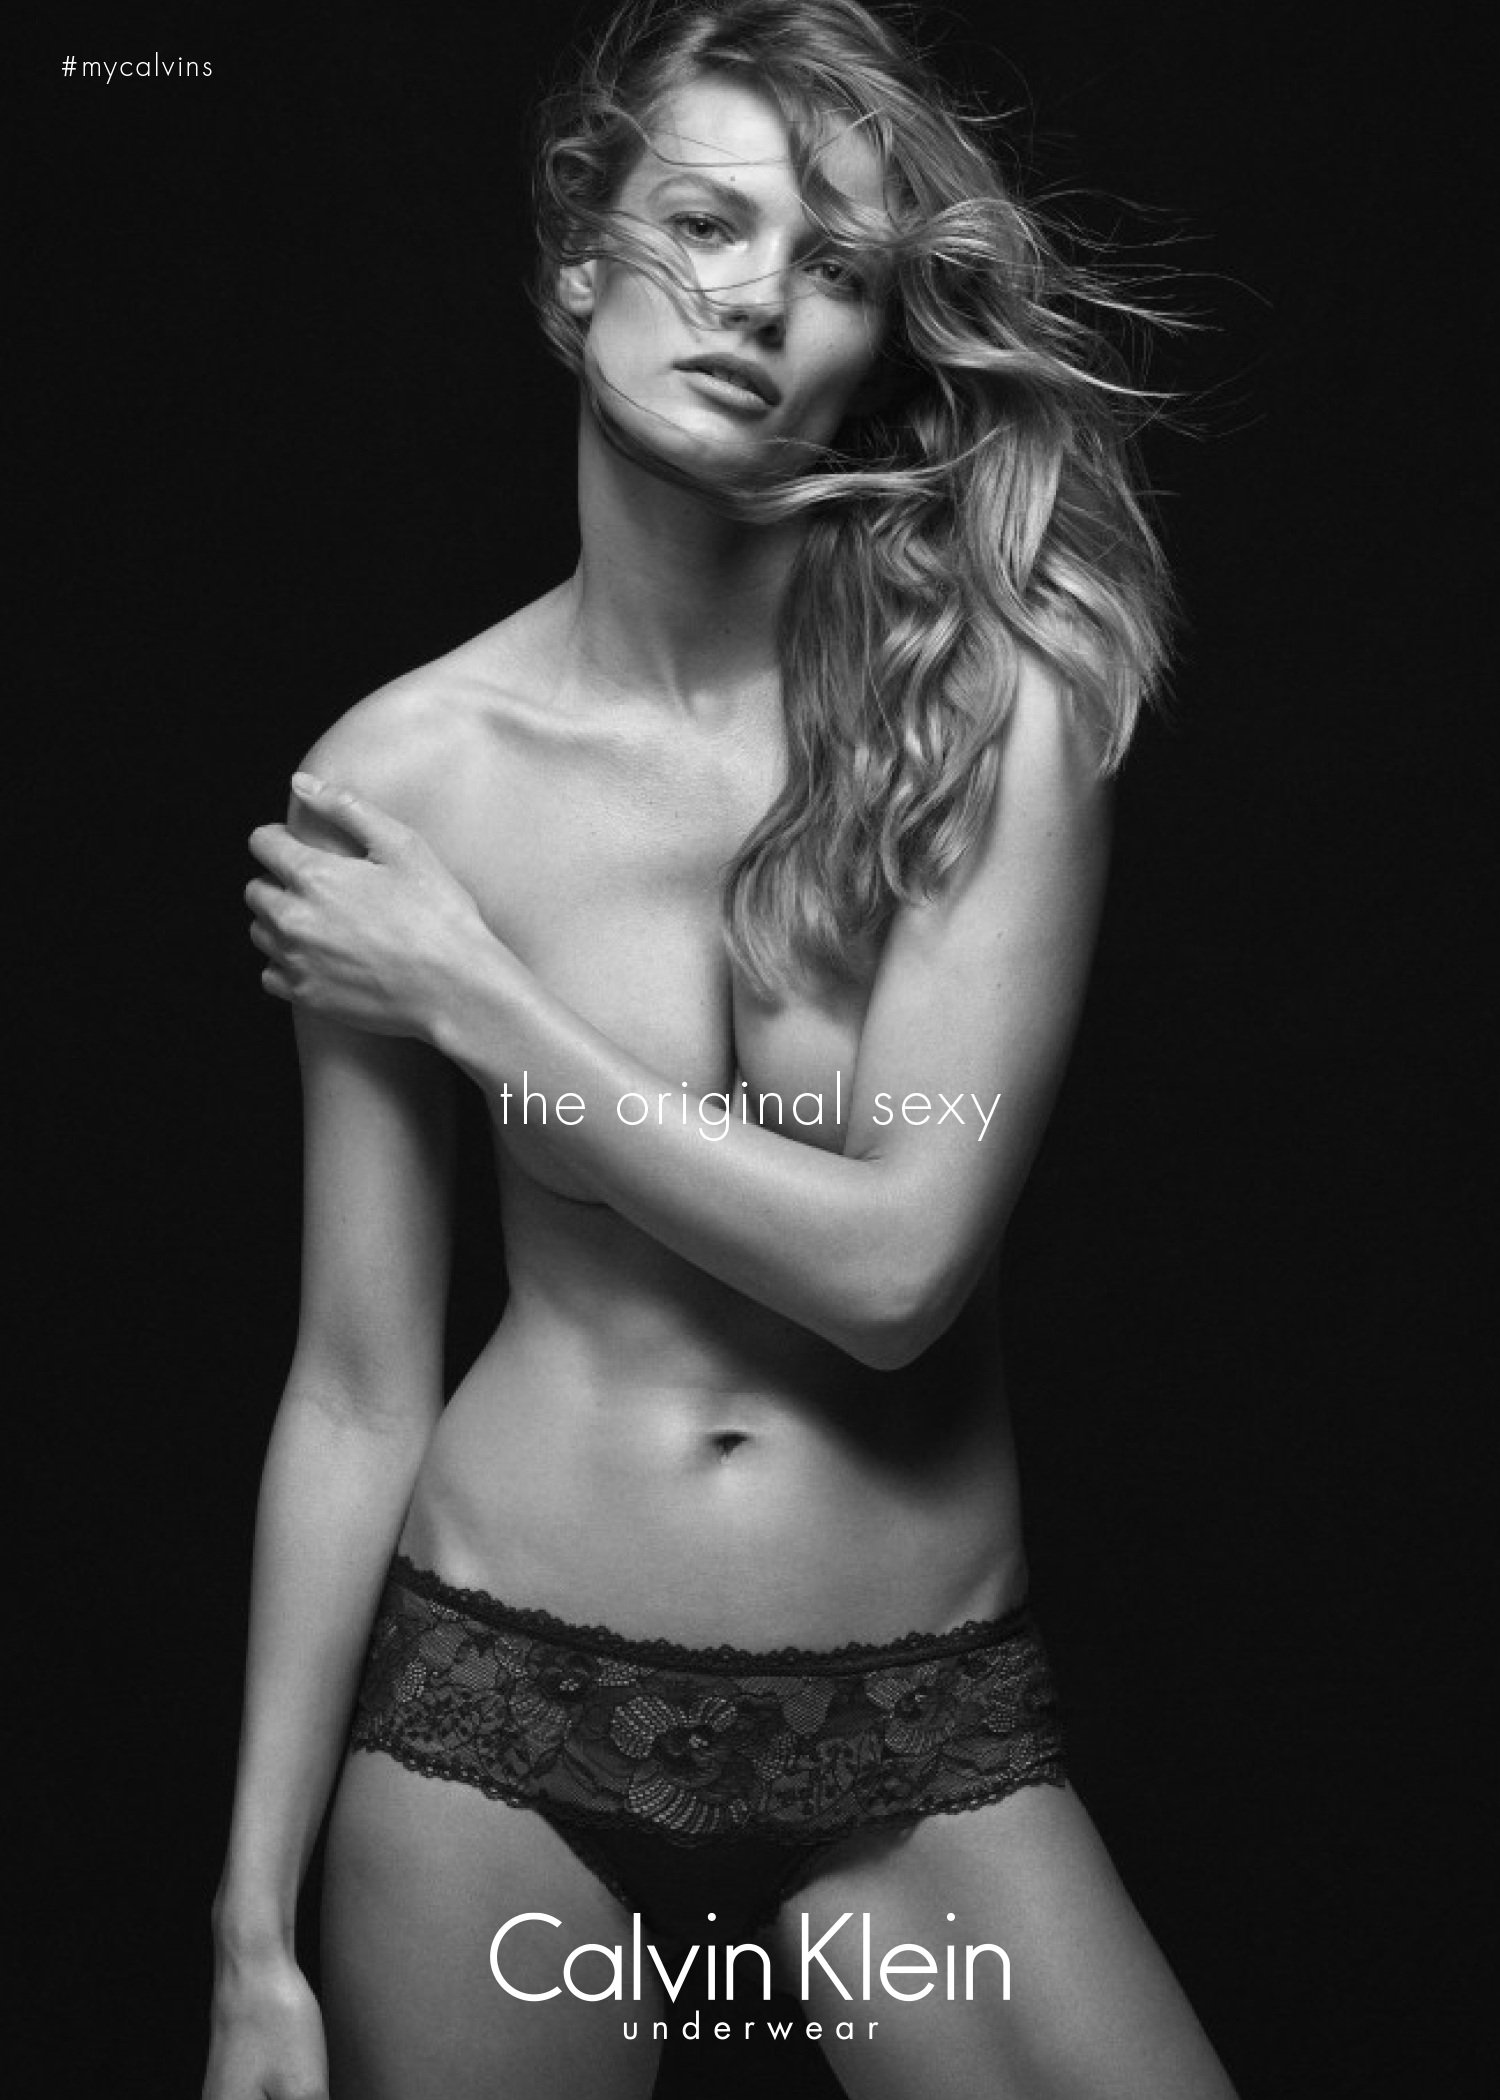 Models strips down for new Calvin Klein underwear campaign. Show